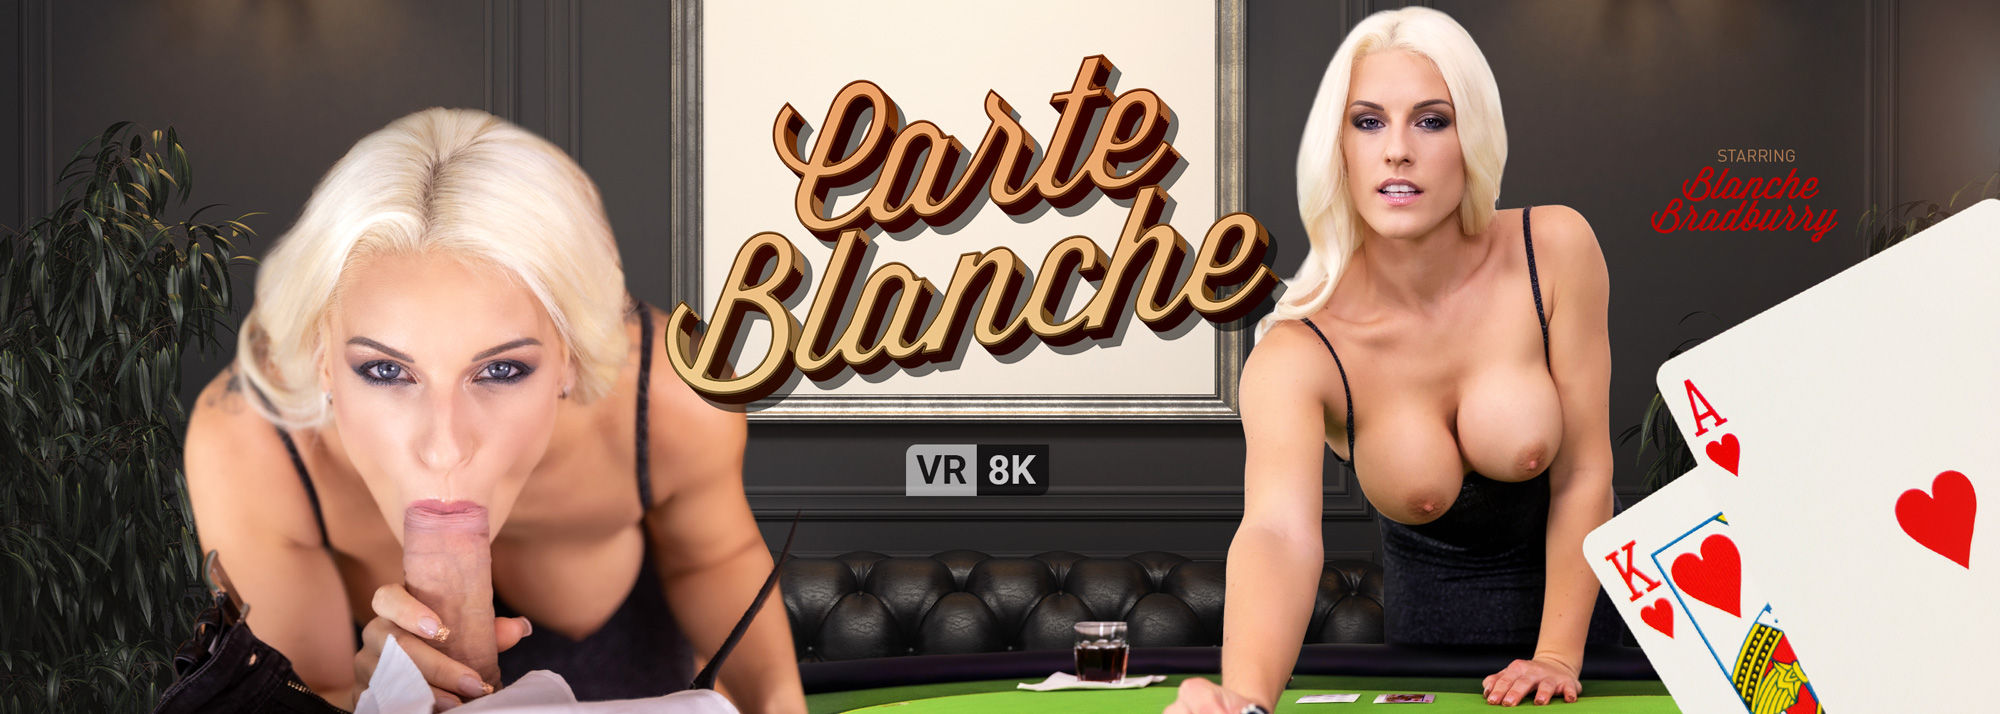 Carte Blanche - VR Porn Video, Starring: Blanche Bradburry